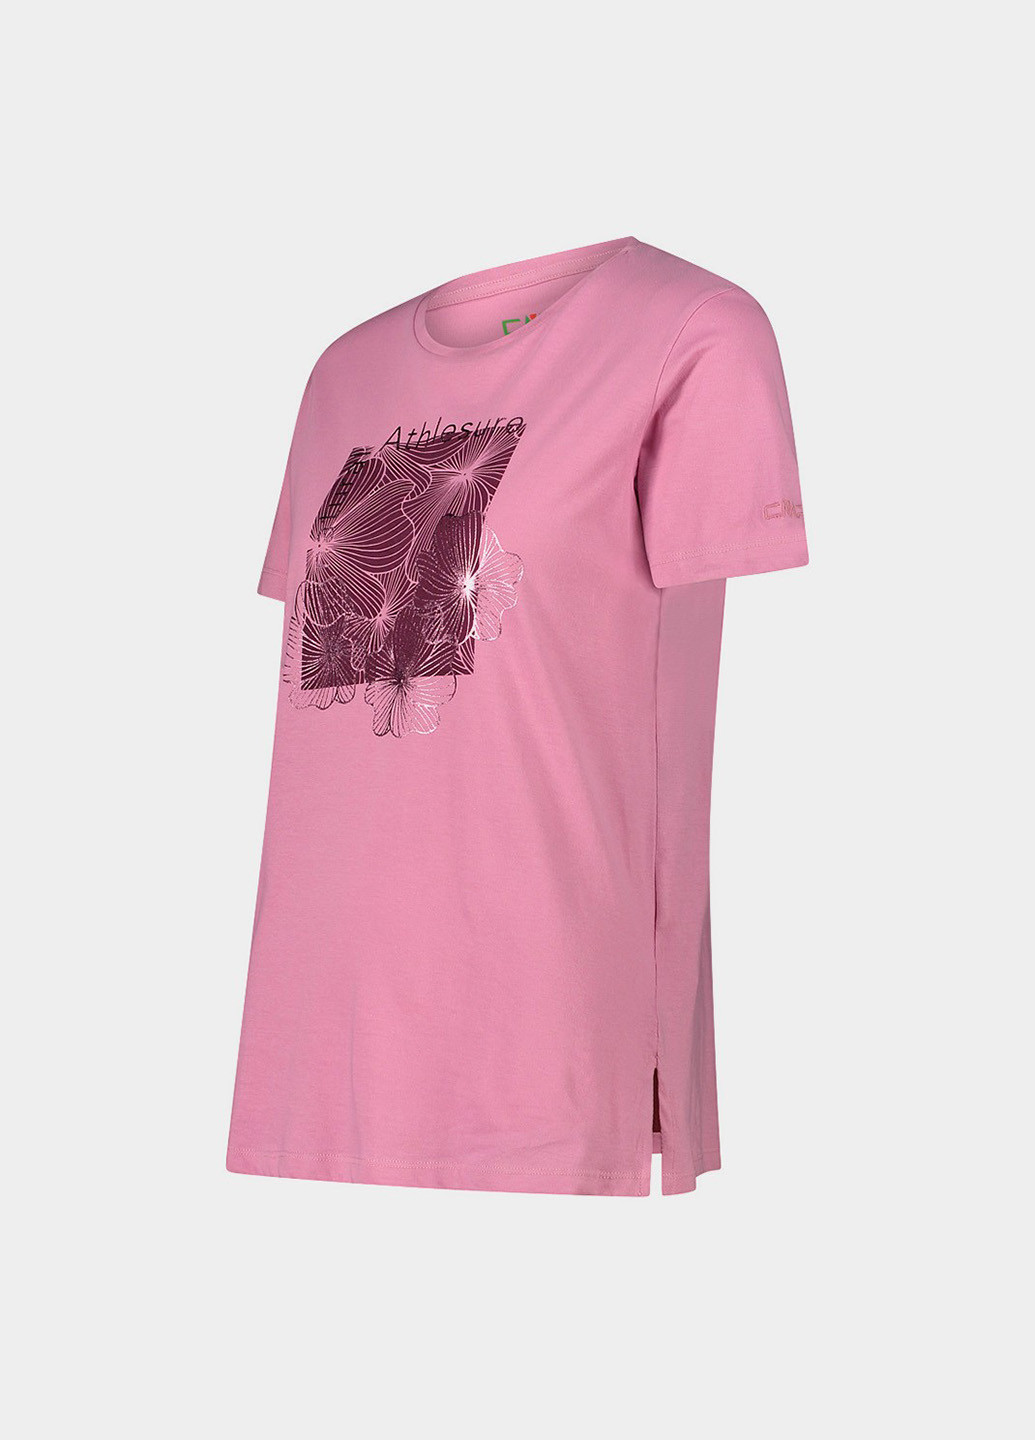 Розовая летняя футболка CMP WOMAN T-SHIRT